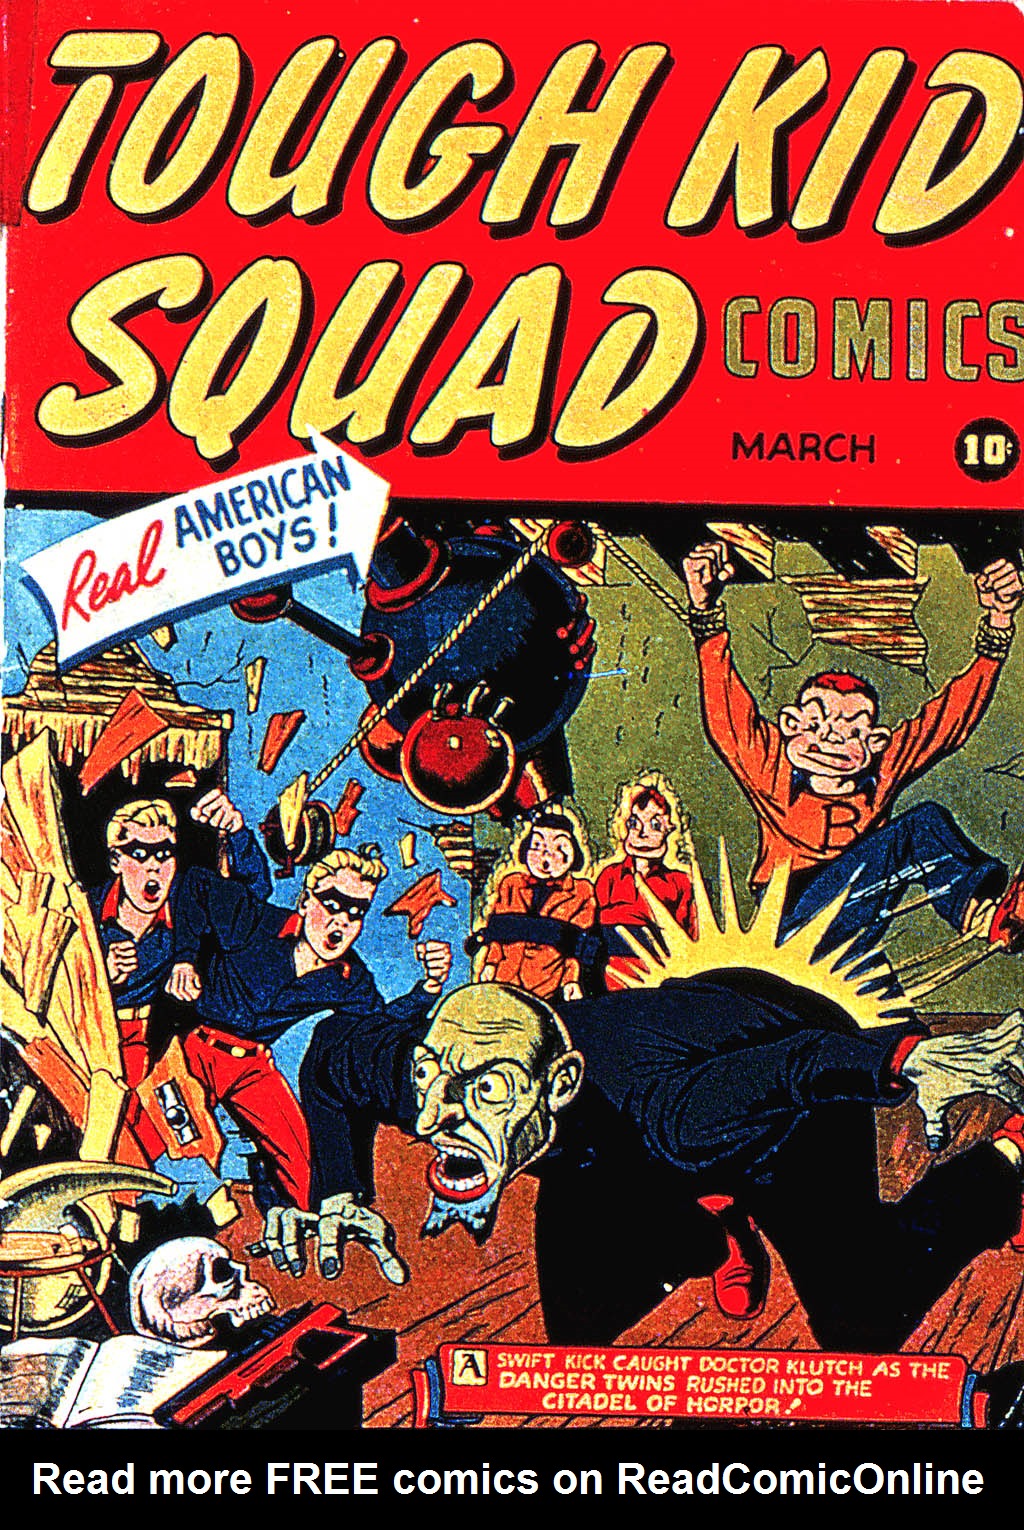 Read online Tough Kid Squad Comics comic -  Issue # Full - 2